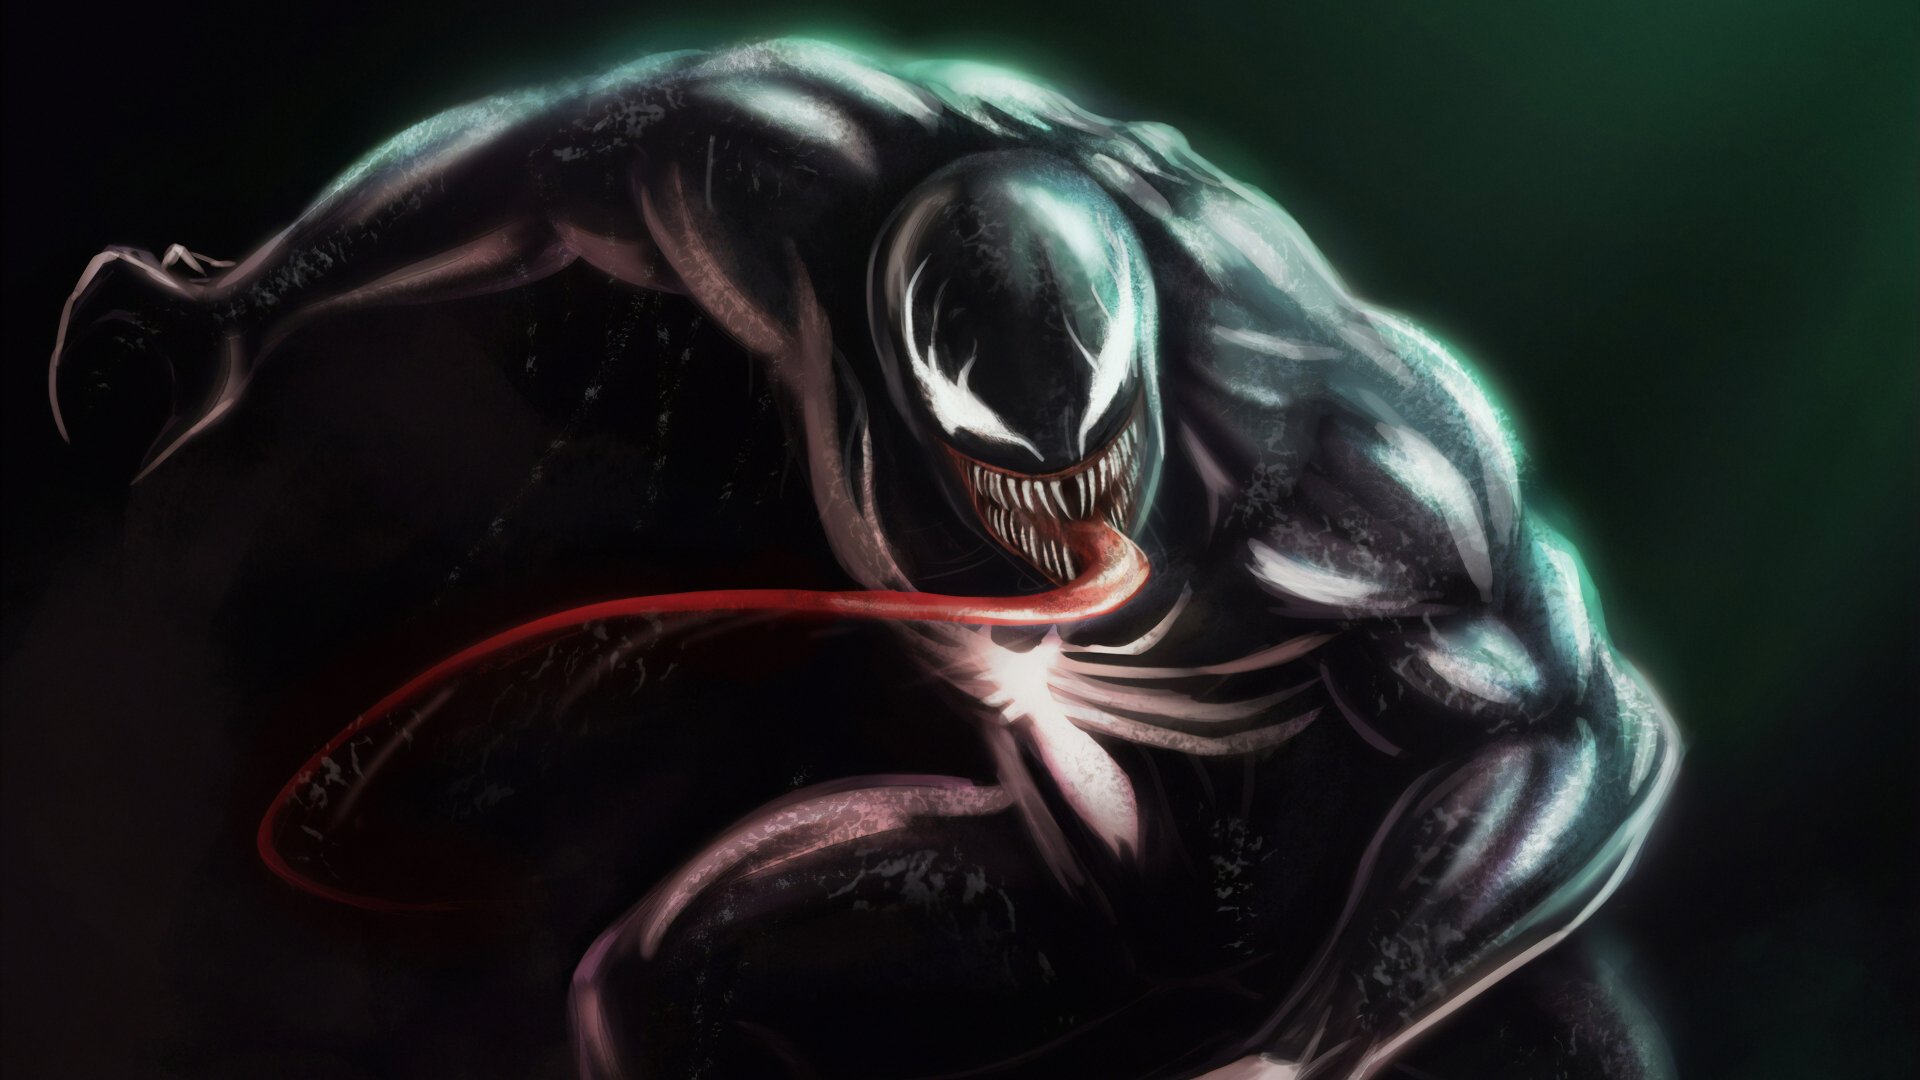 Comics Venom 4k Ultra HD Wallpaper by Daniele Ariuolo